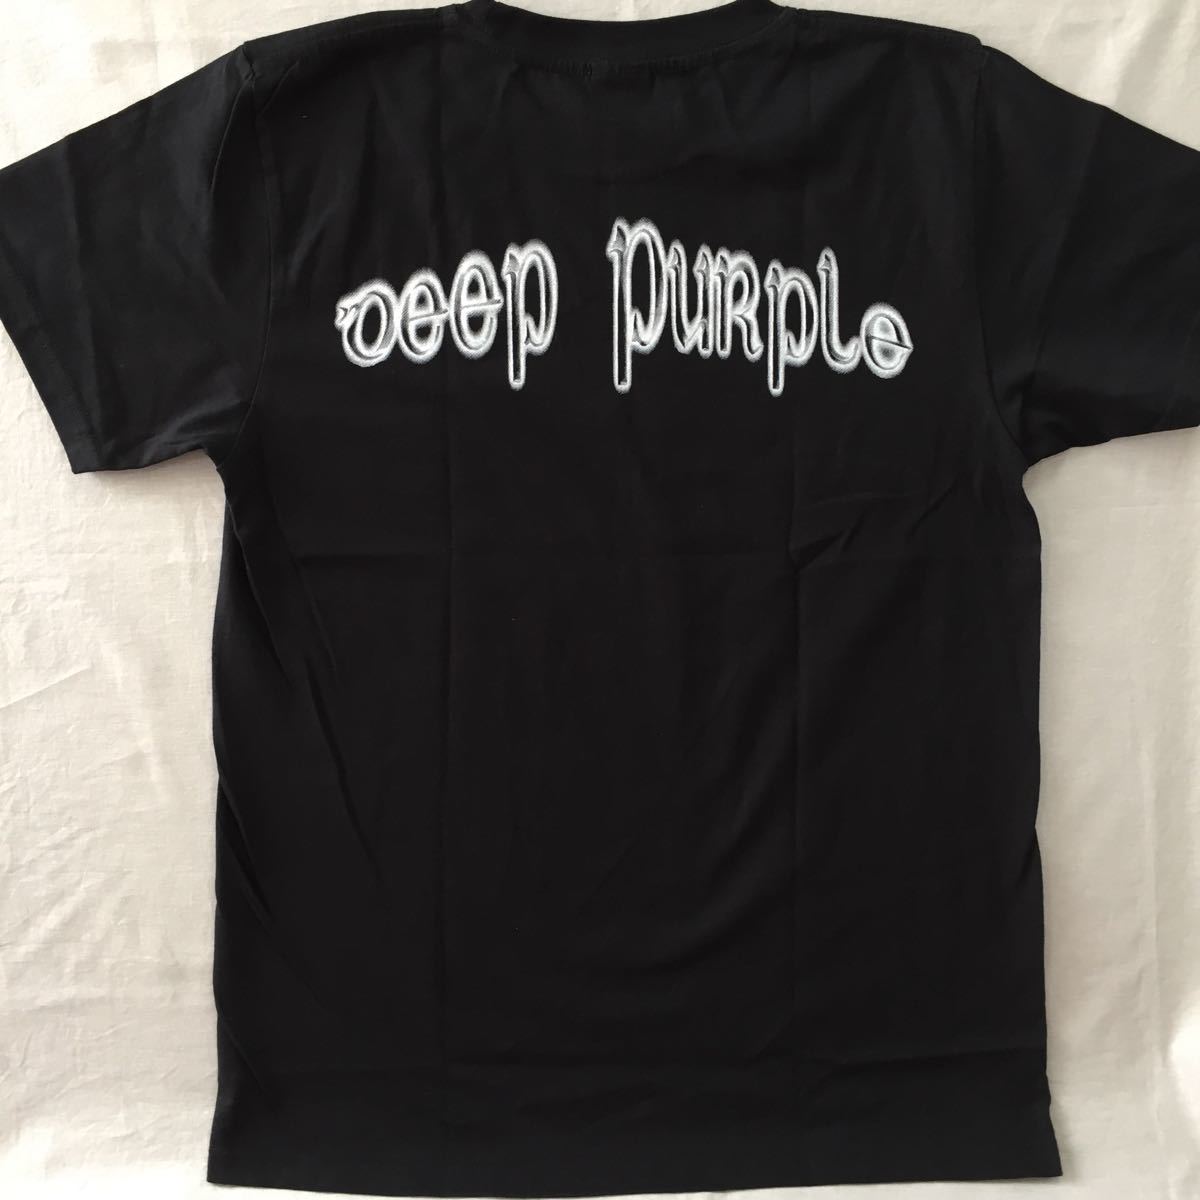  лента  футболка   глубокий  фиолетовый (DEEP PURPLE) новый товар  L